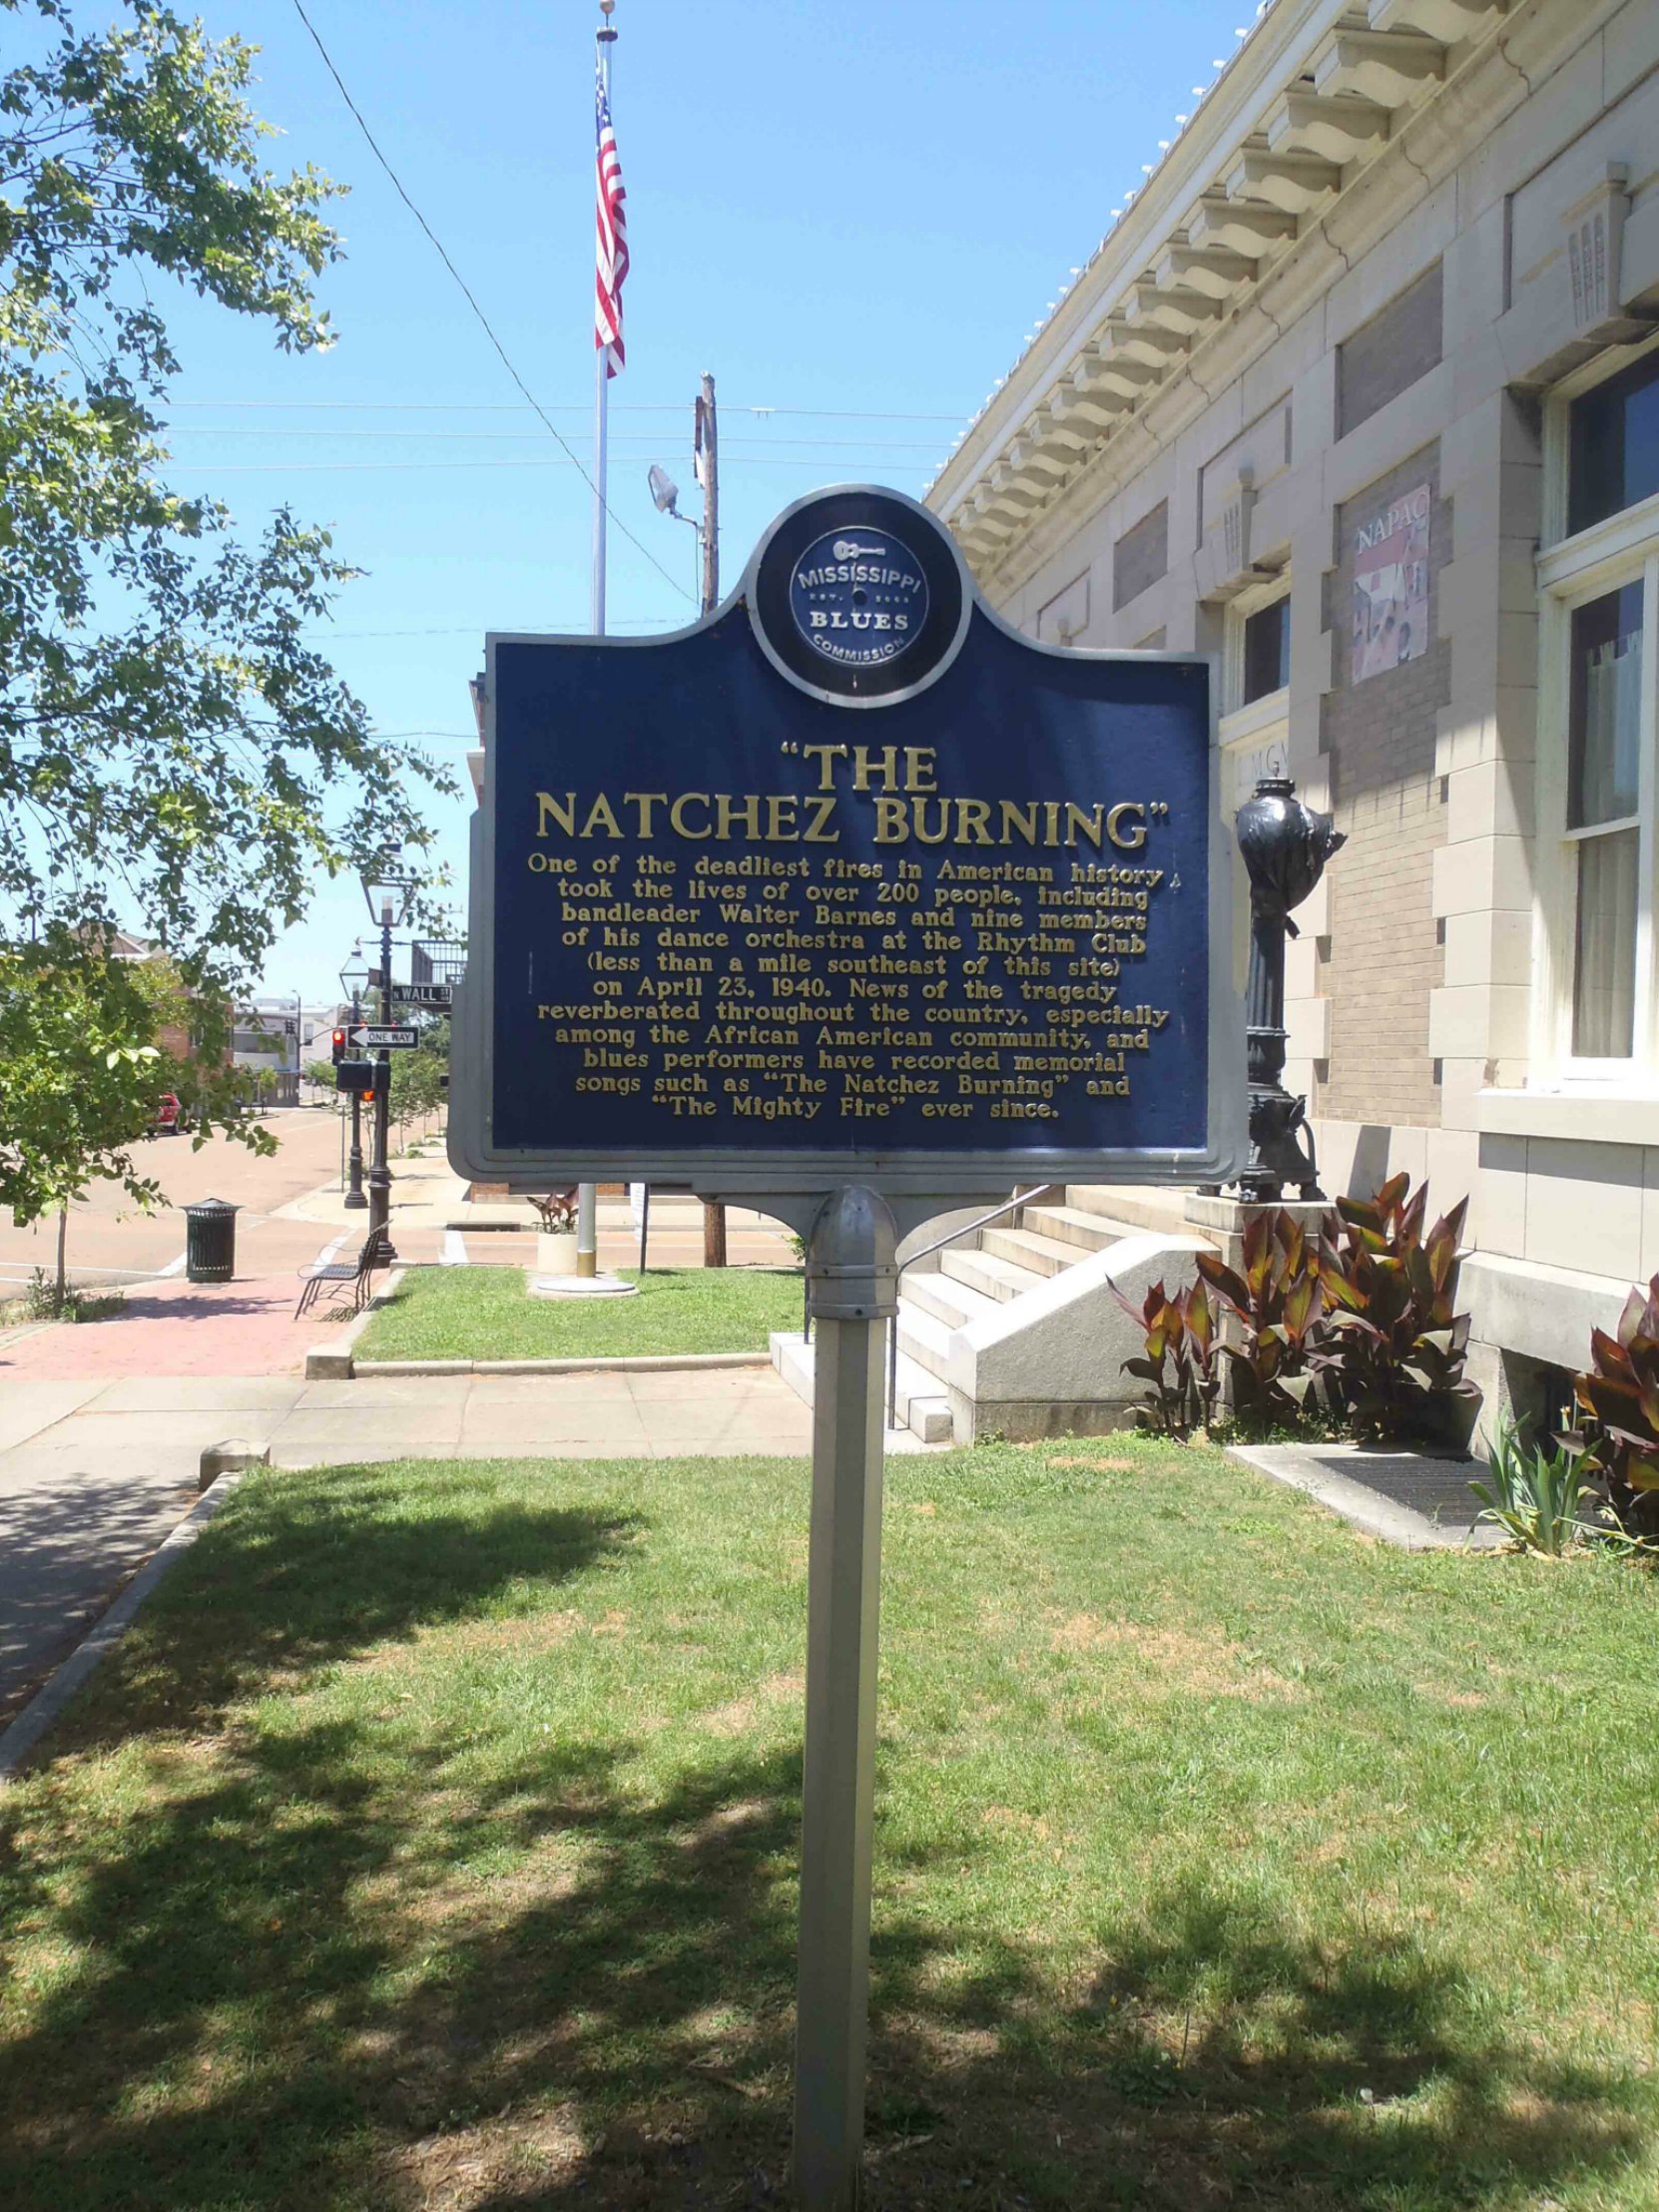 Mississippi Blues Trail marker commemorating The Natchez Burning, Natchez, Mississippi